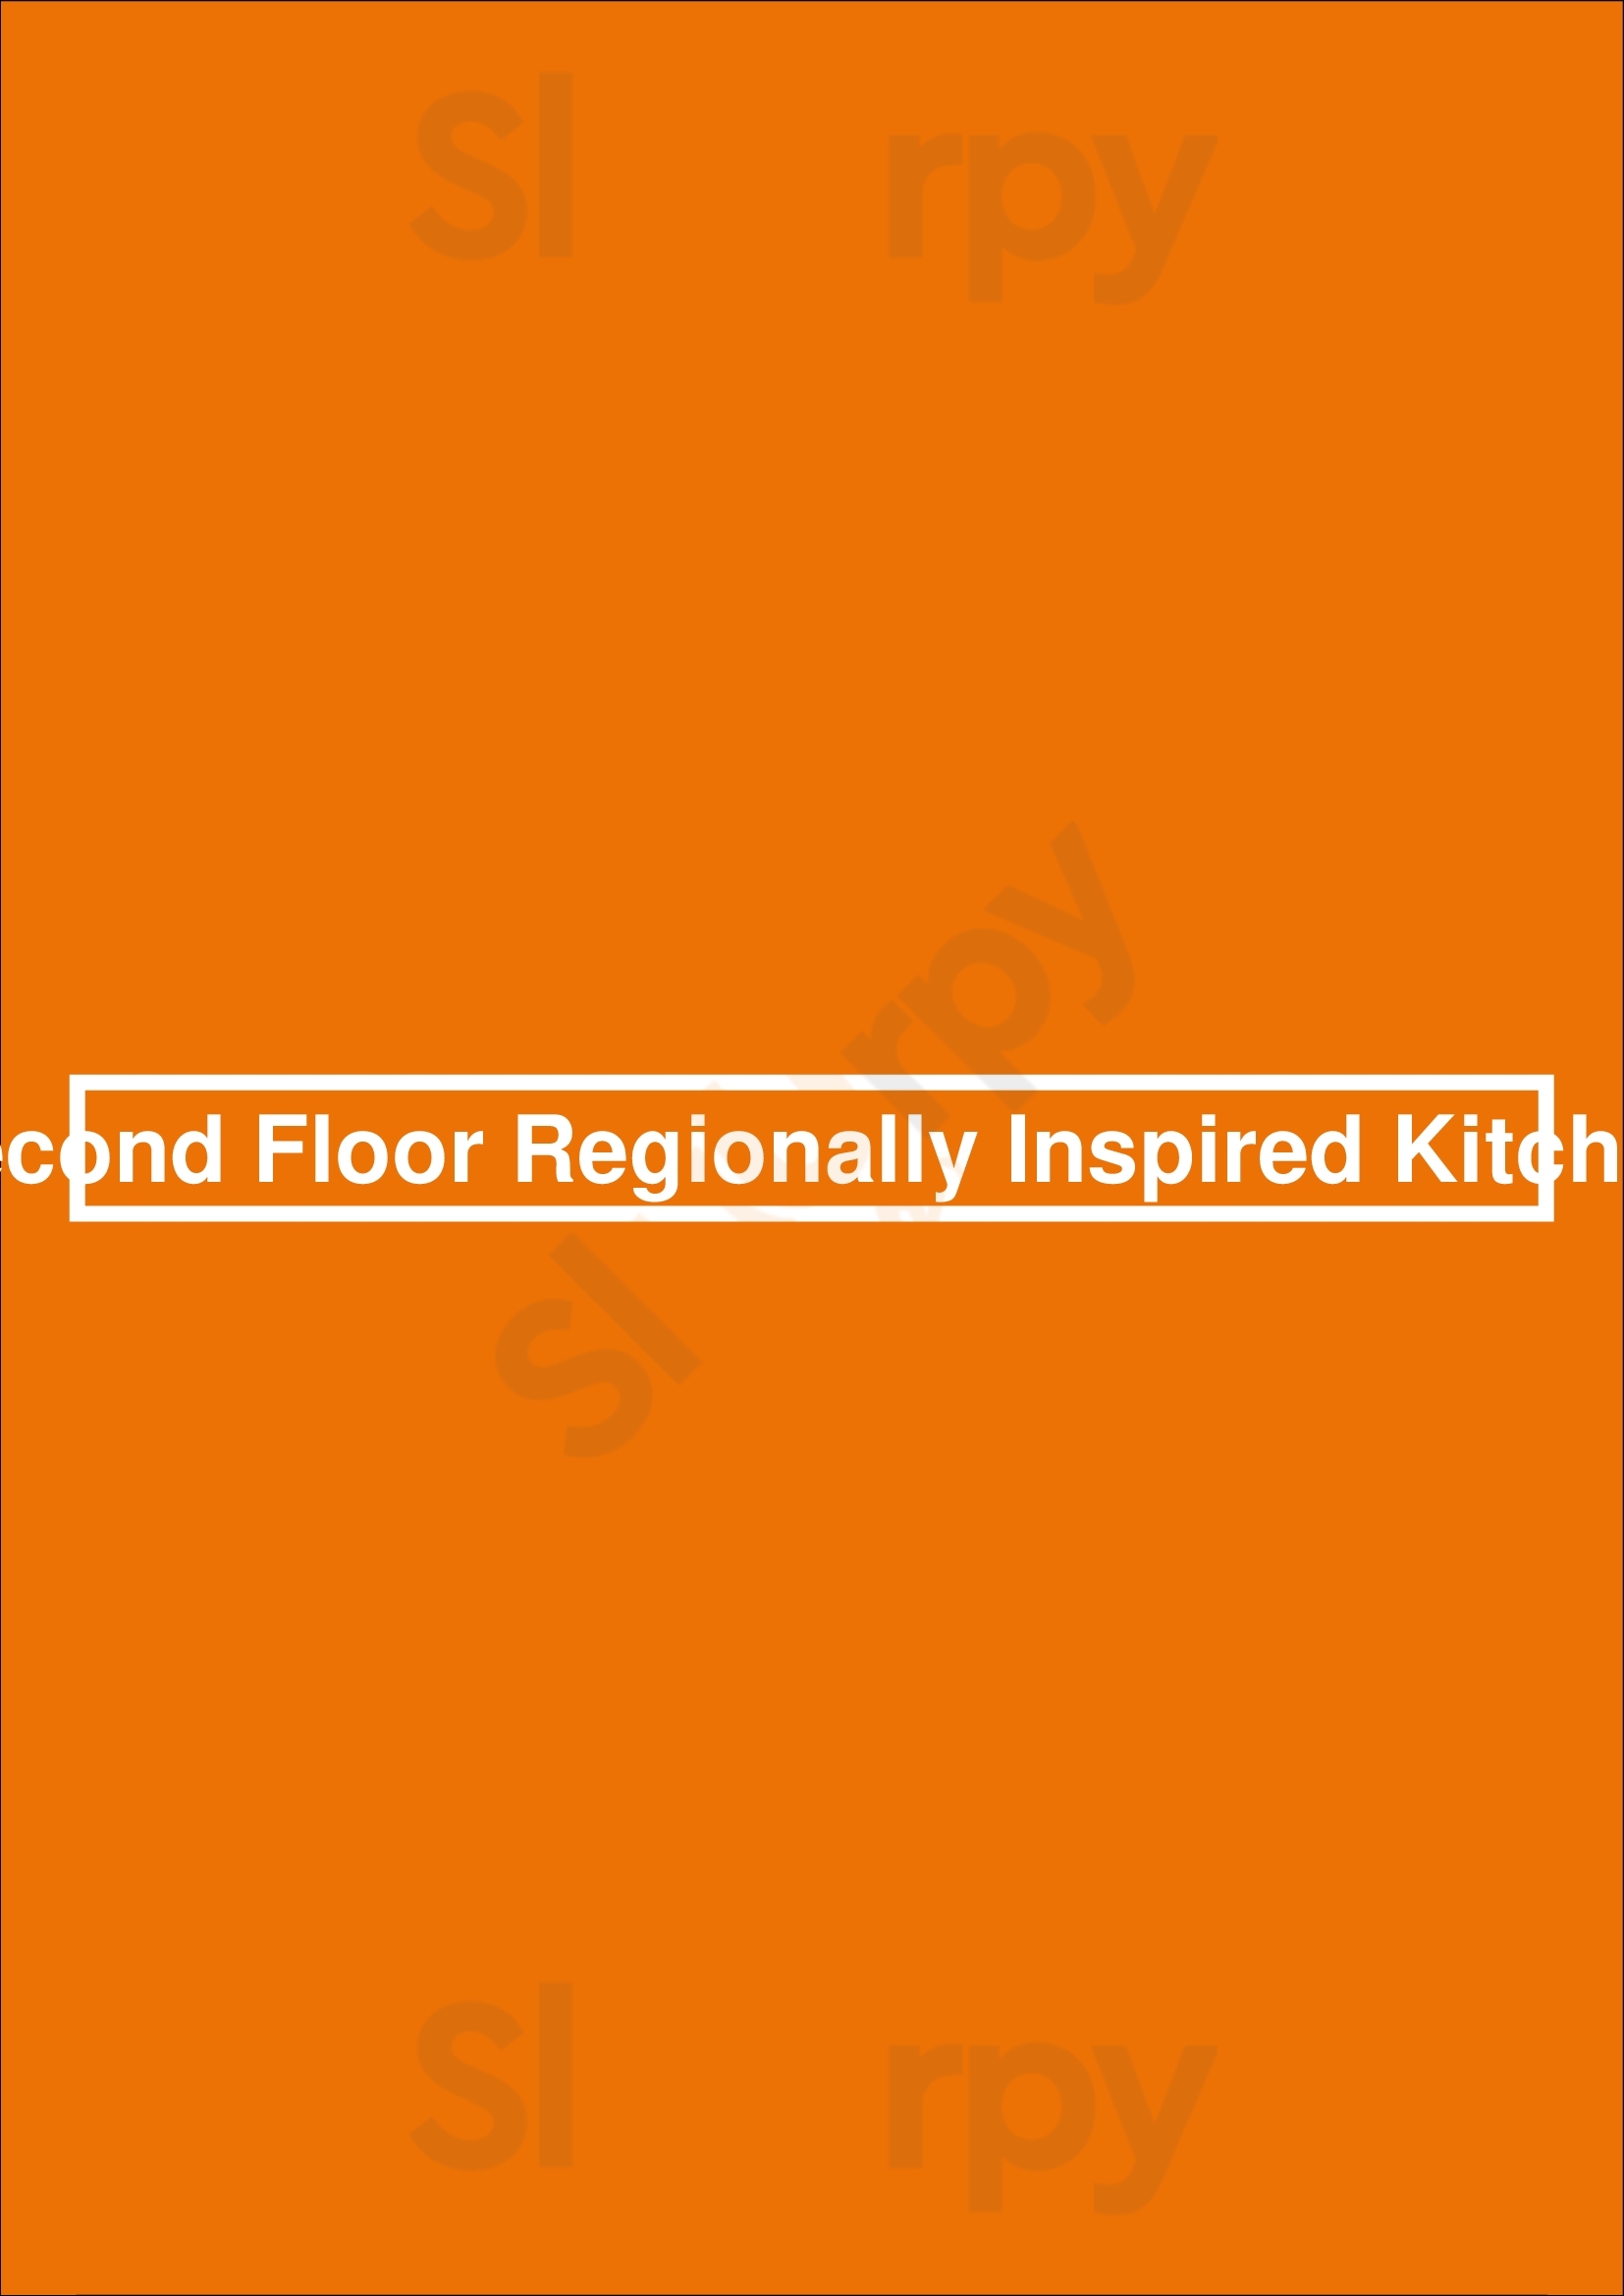 Second Floor Regionally Inspired Kitchen Dallas Menu - 1